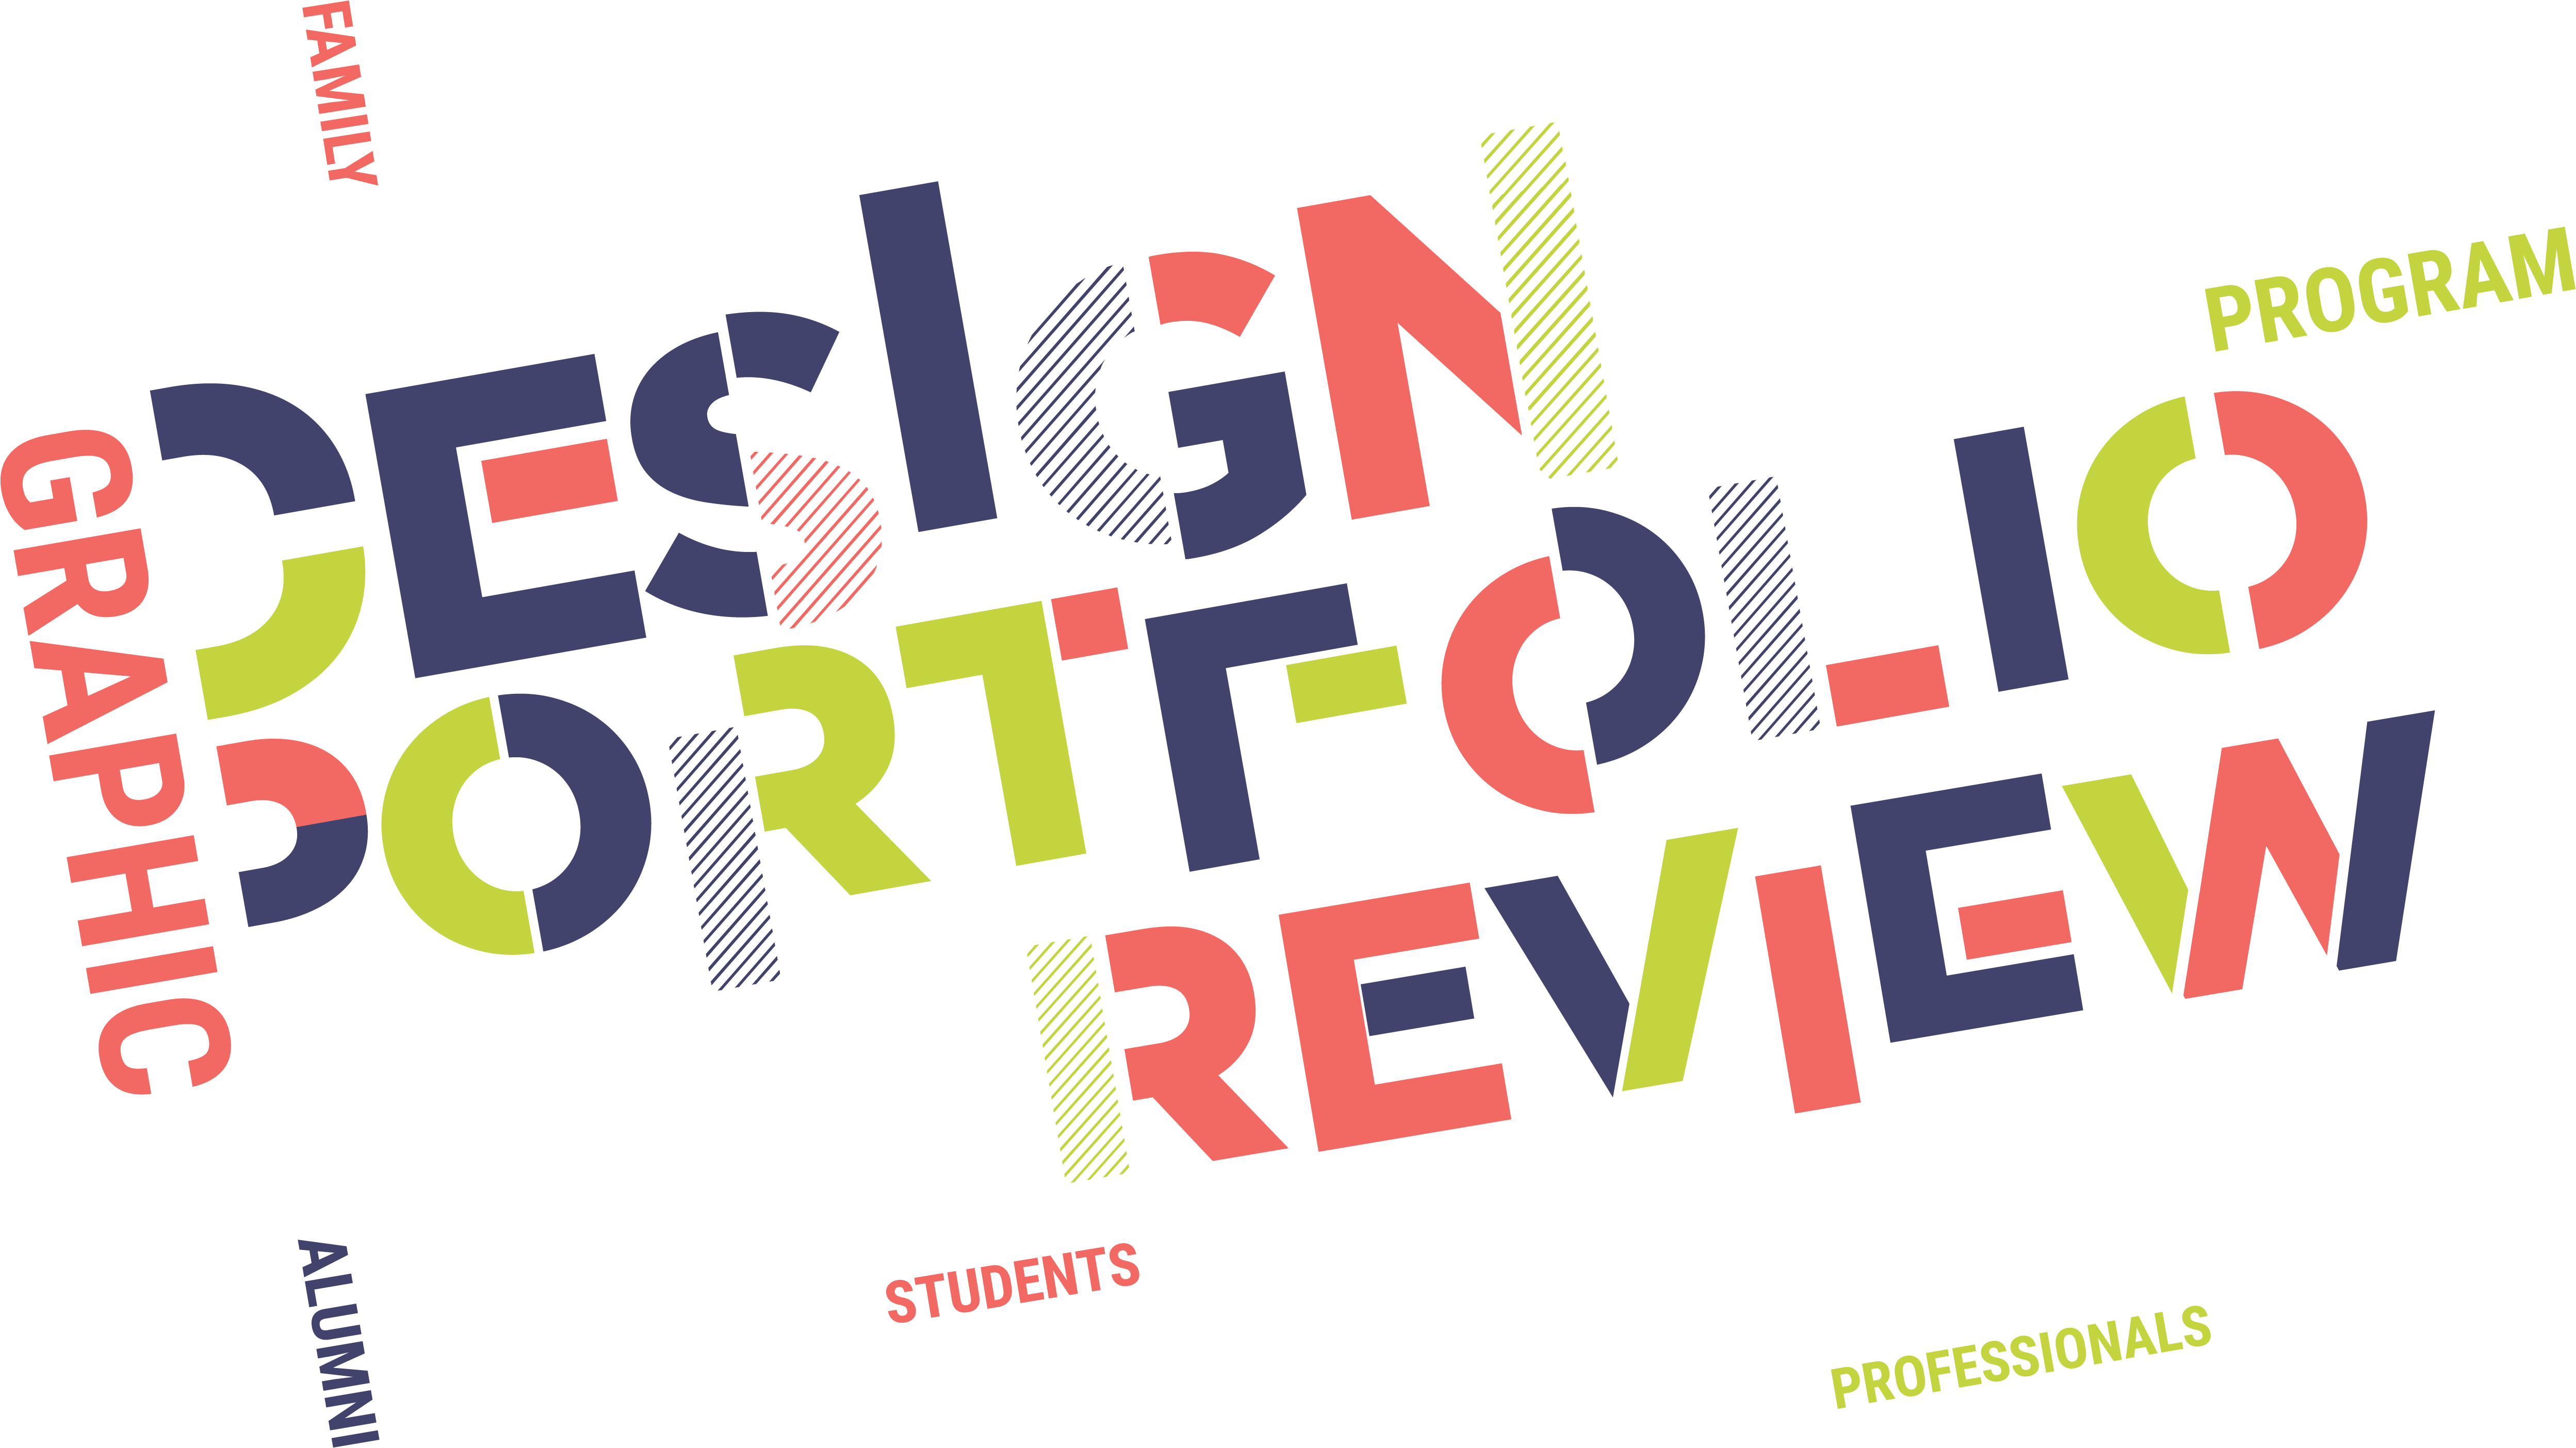 Portfolio Review - Graphic Design (5101x3301)